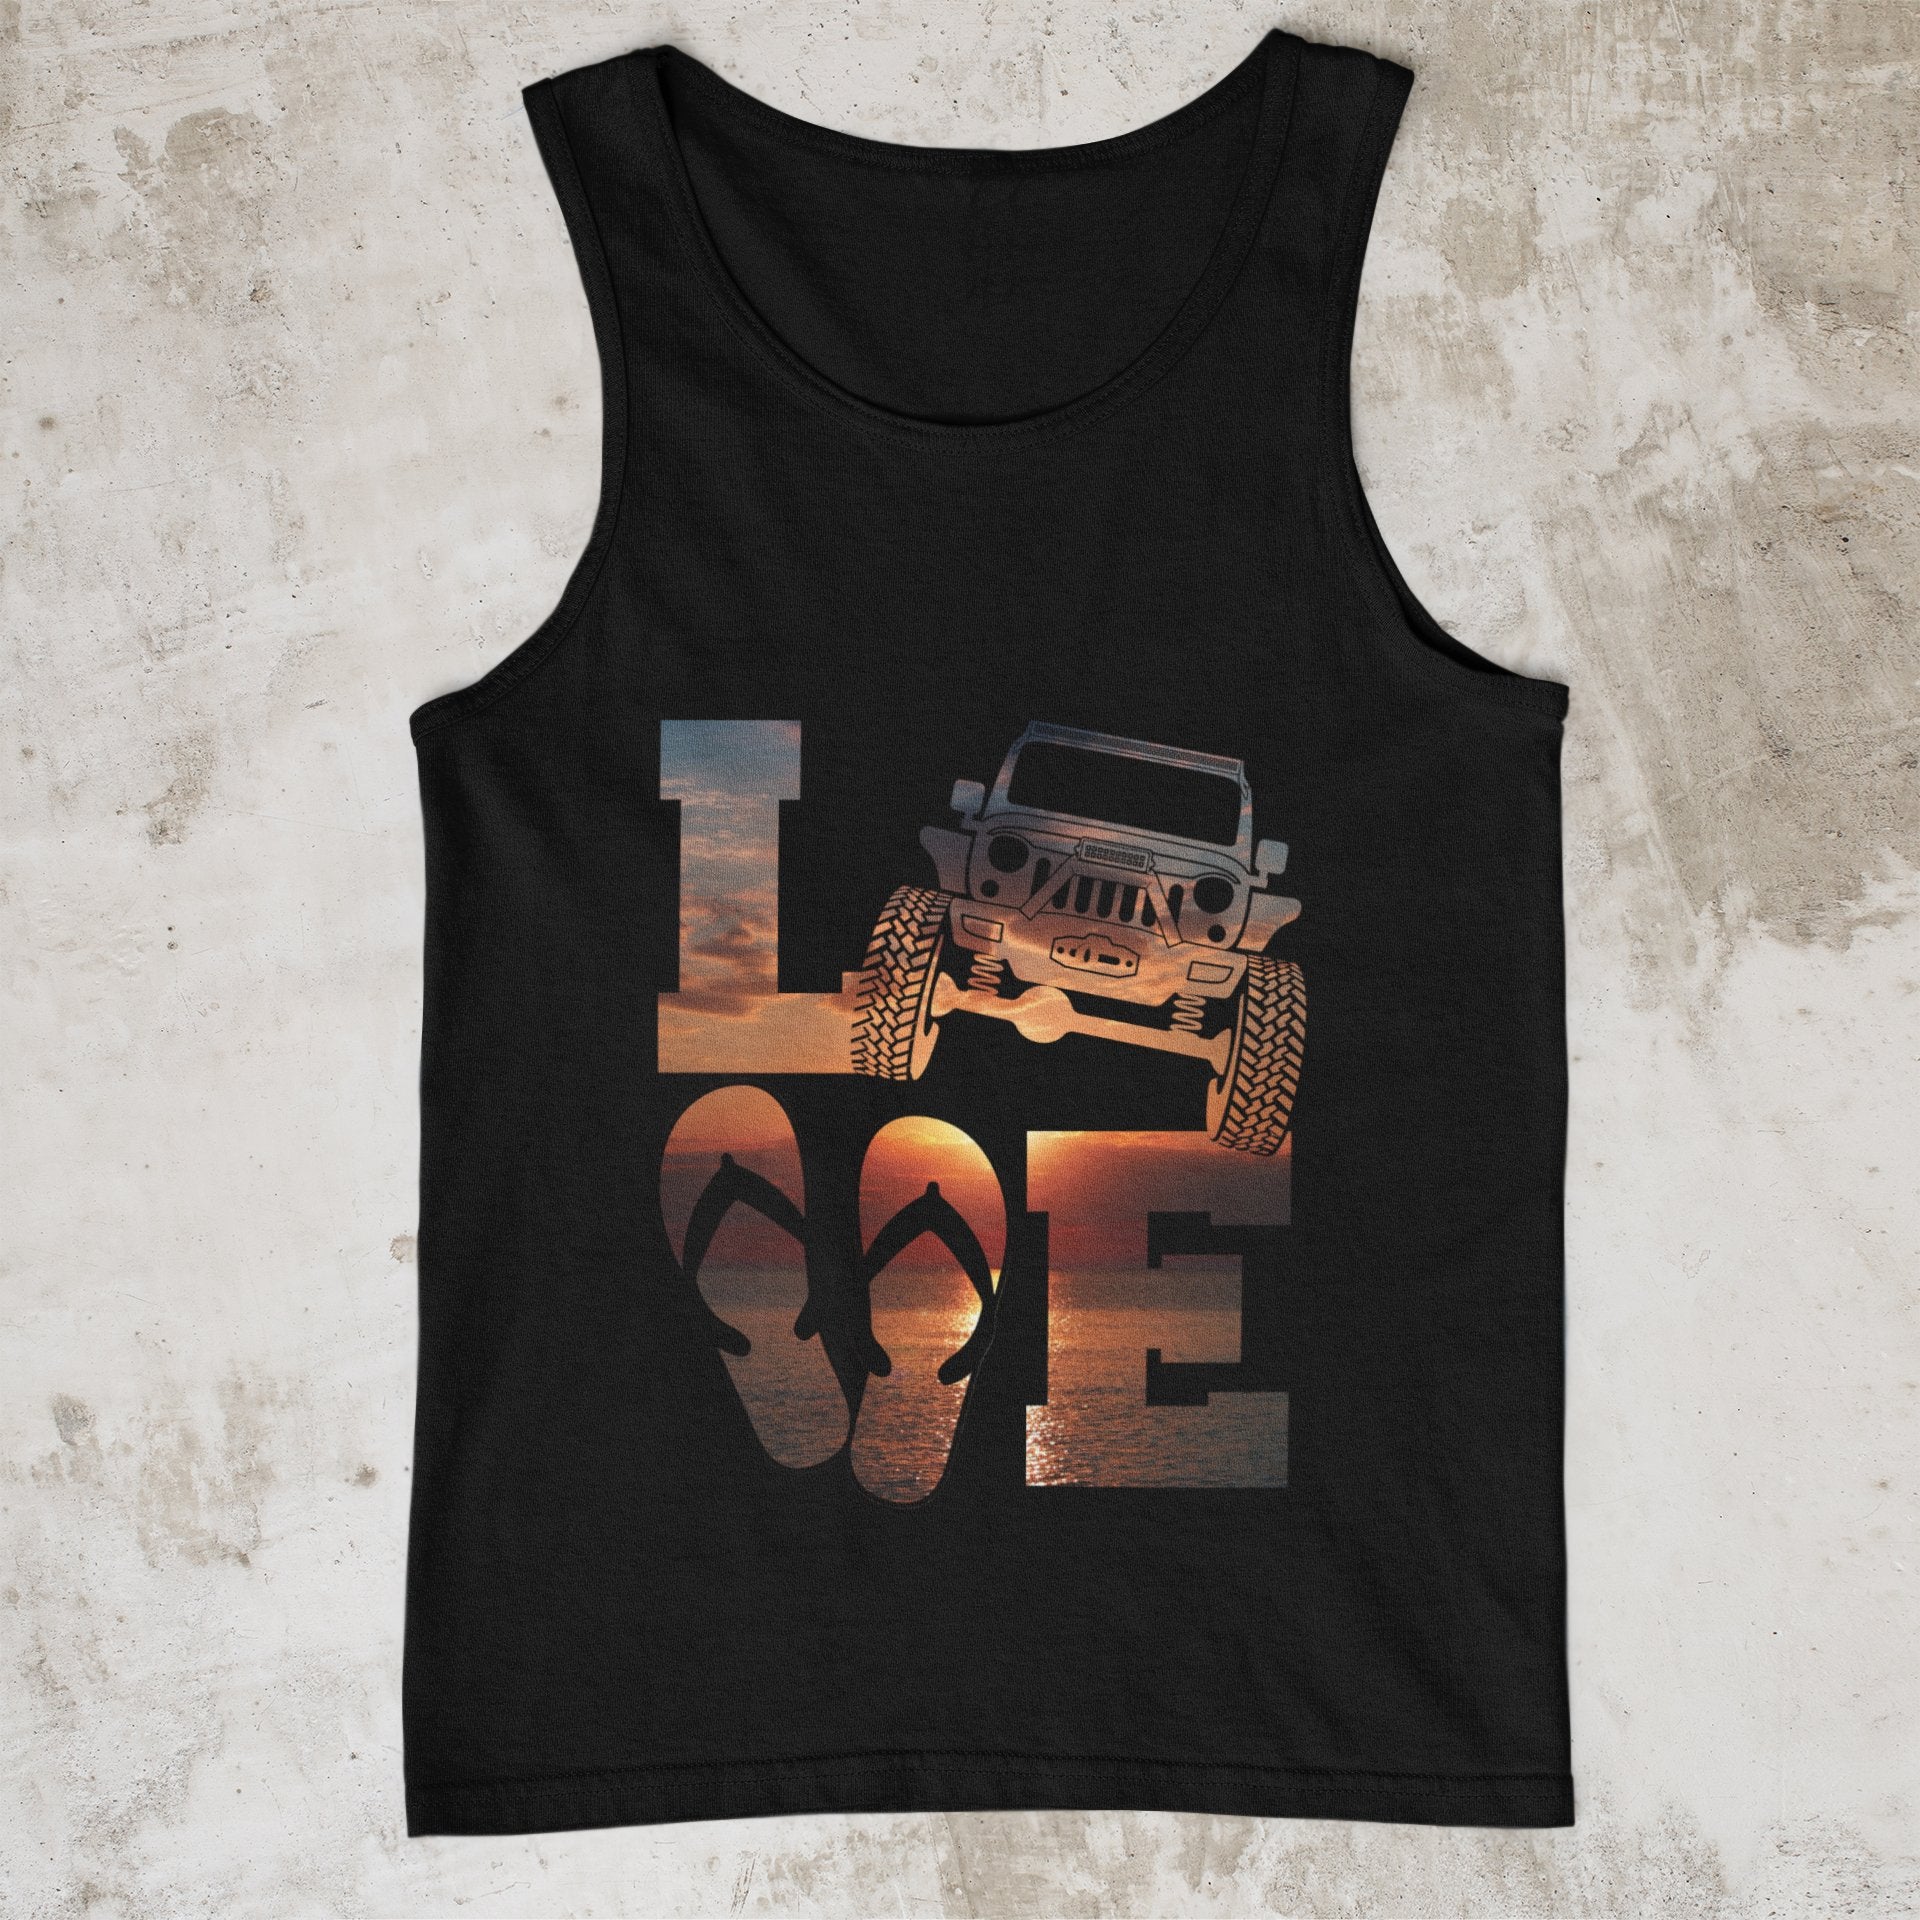 4X4 LOVE Orange Lake Sunset - Tank, T-Shirt, Hoodie With FREE Decal - DecalFreakz